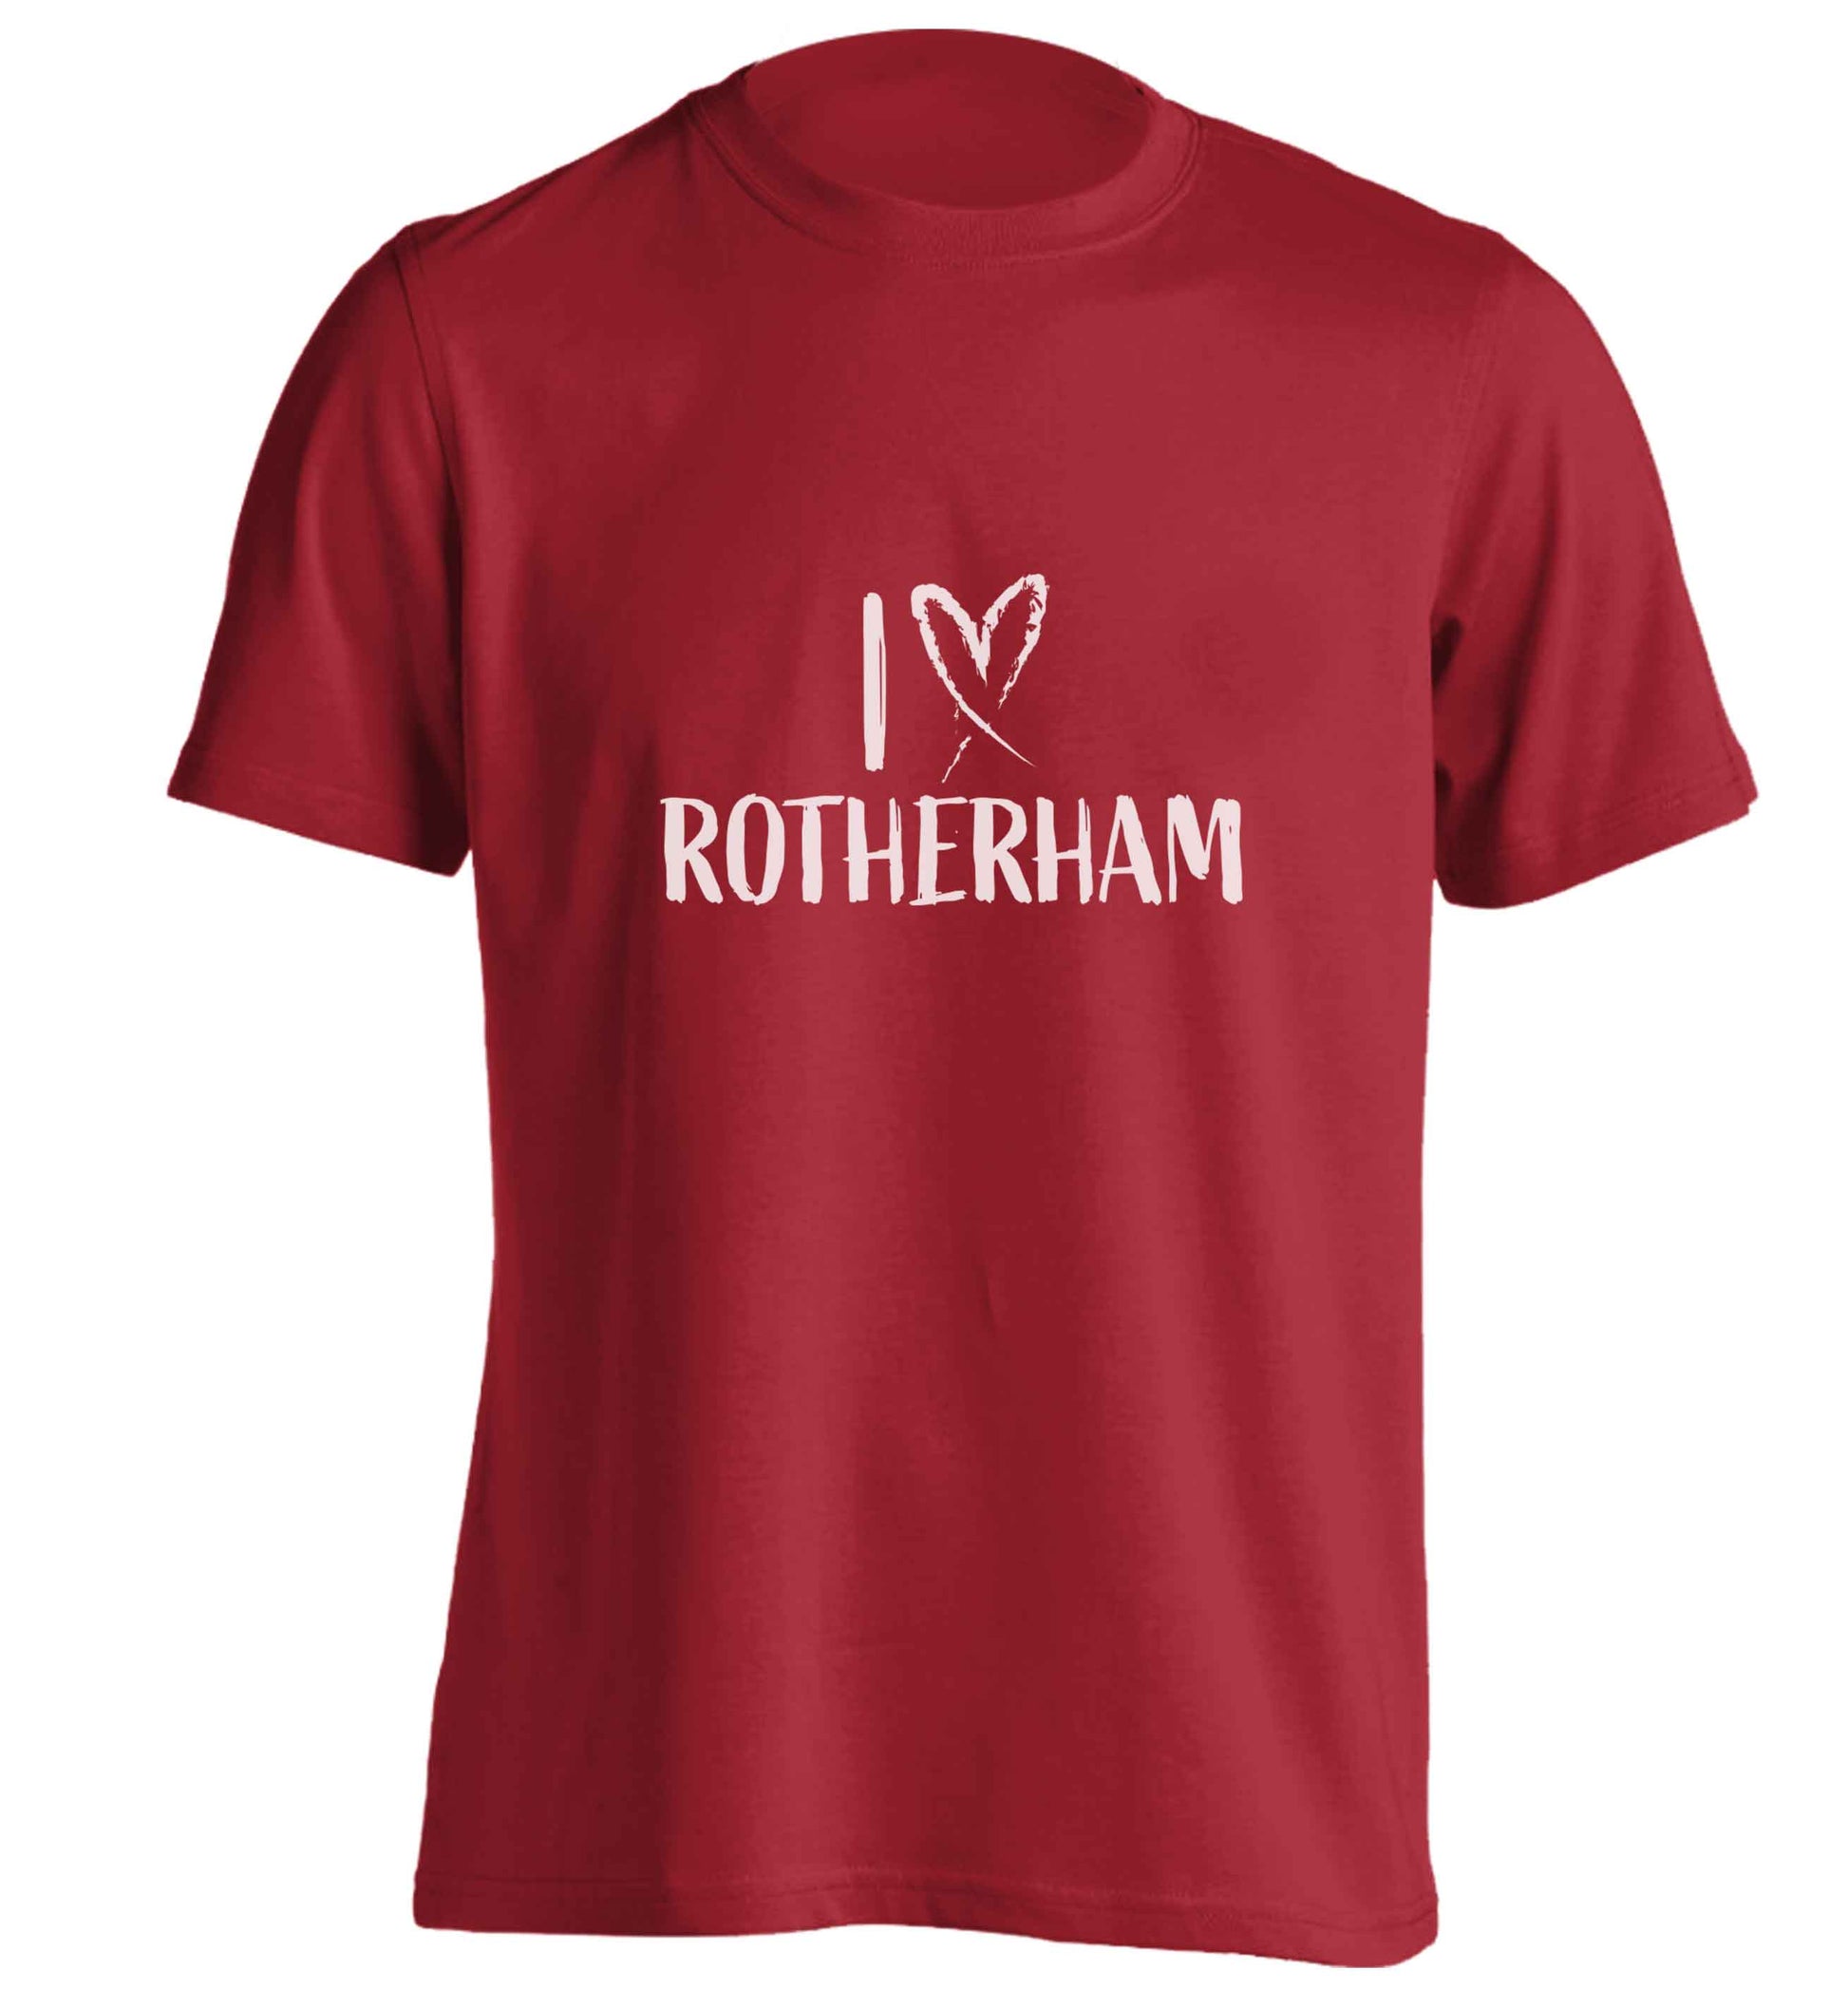 I love Rotherham adults unisex red Tshirt 2XL